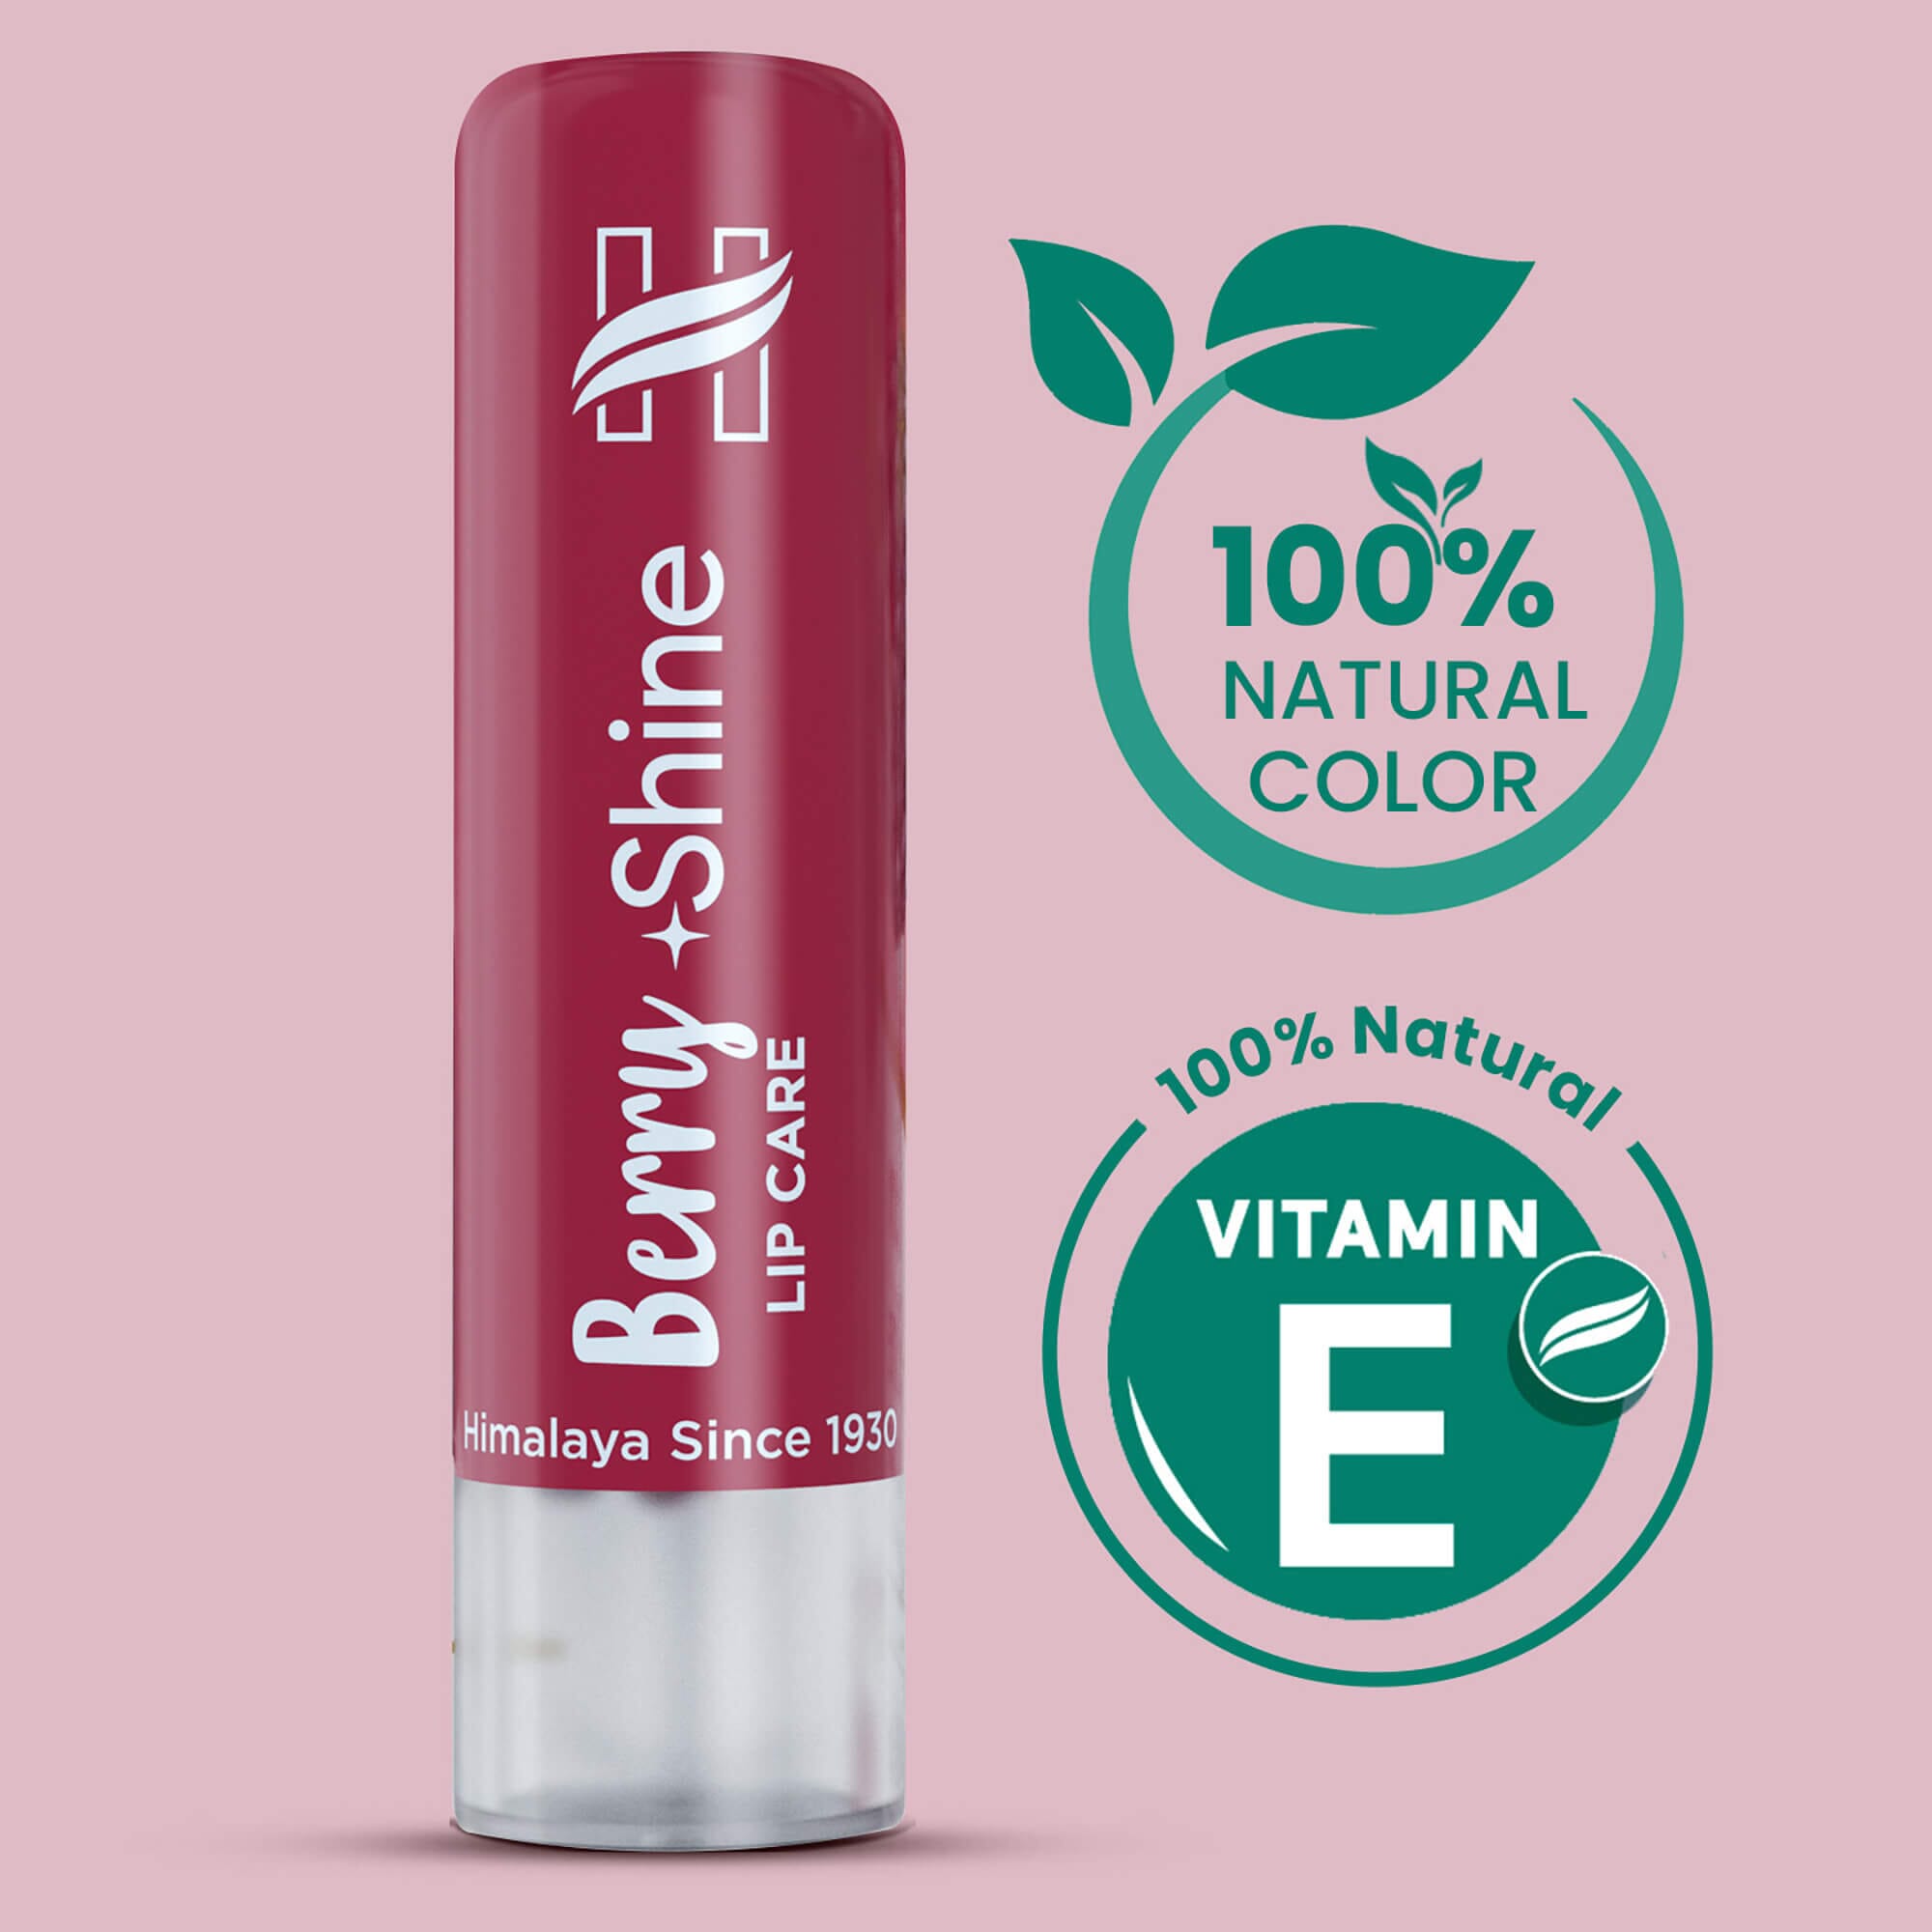  Himalaya Berry Shine Lip Care - 100% Natural Vitamin E